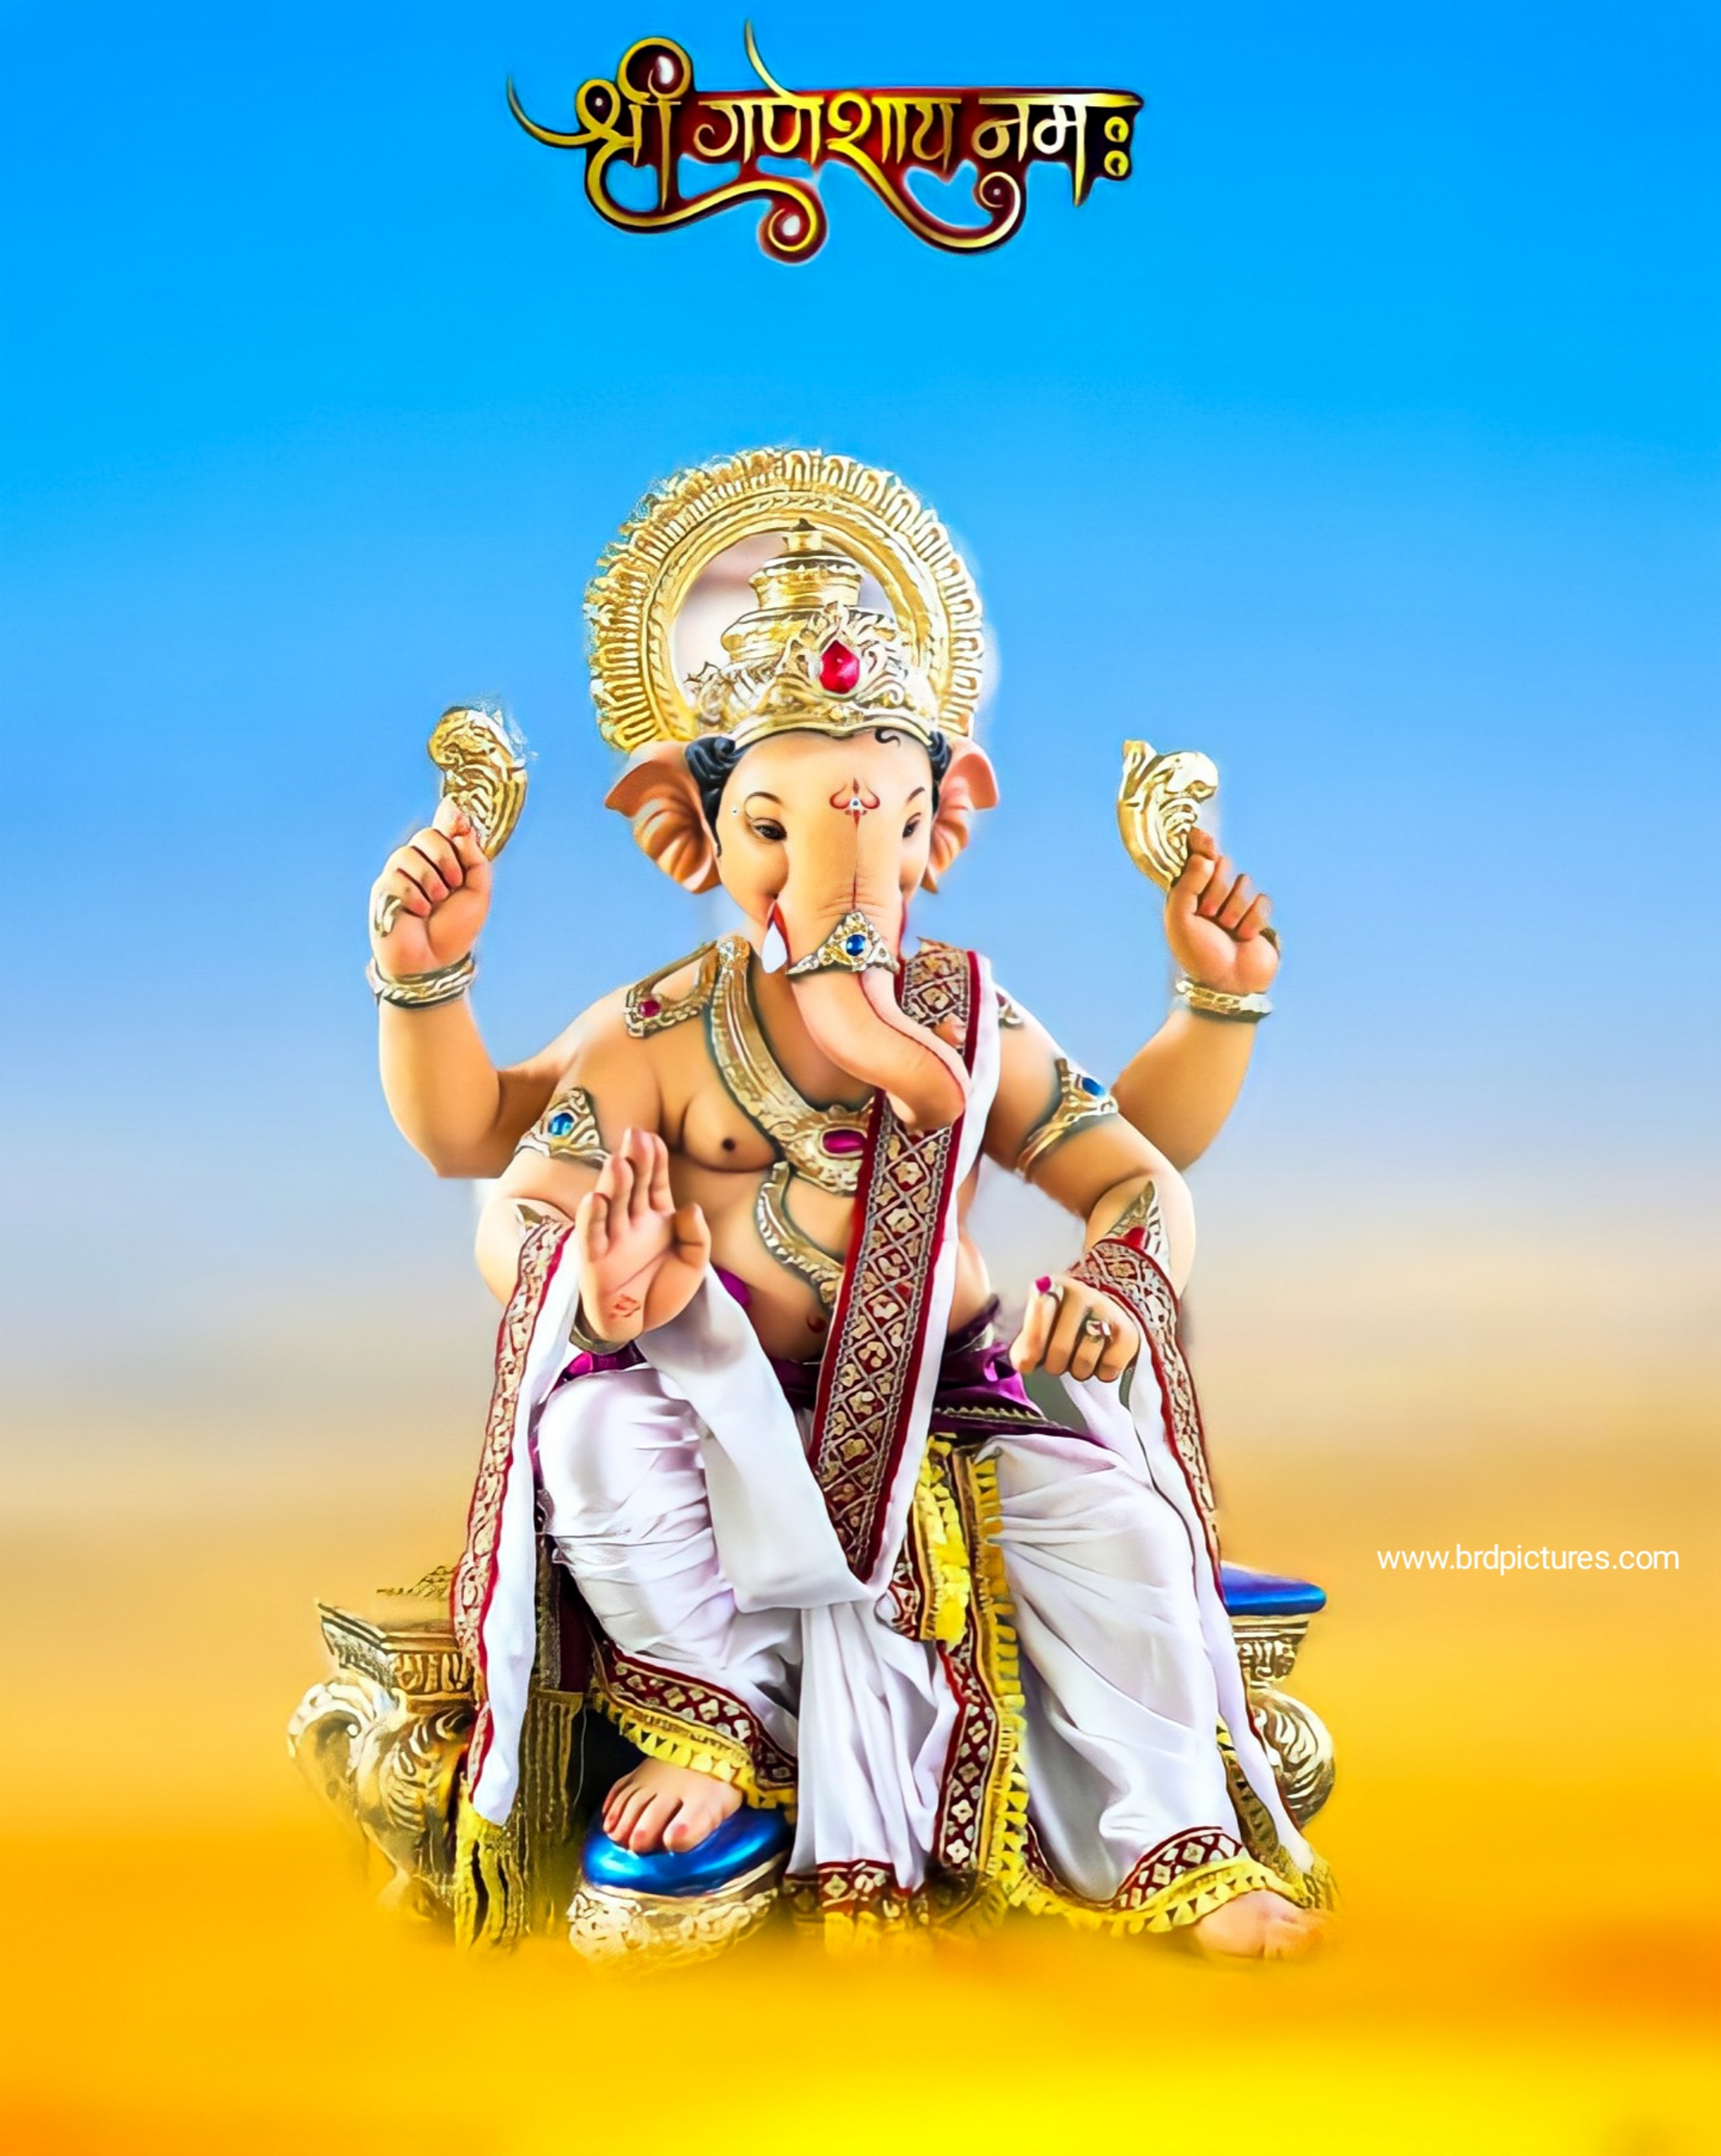 Ganesh Chaturthi Background And Wallpaper Image